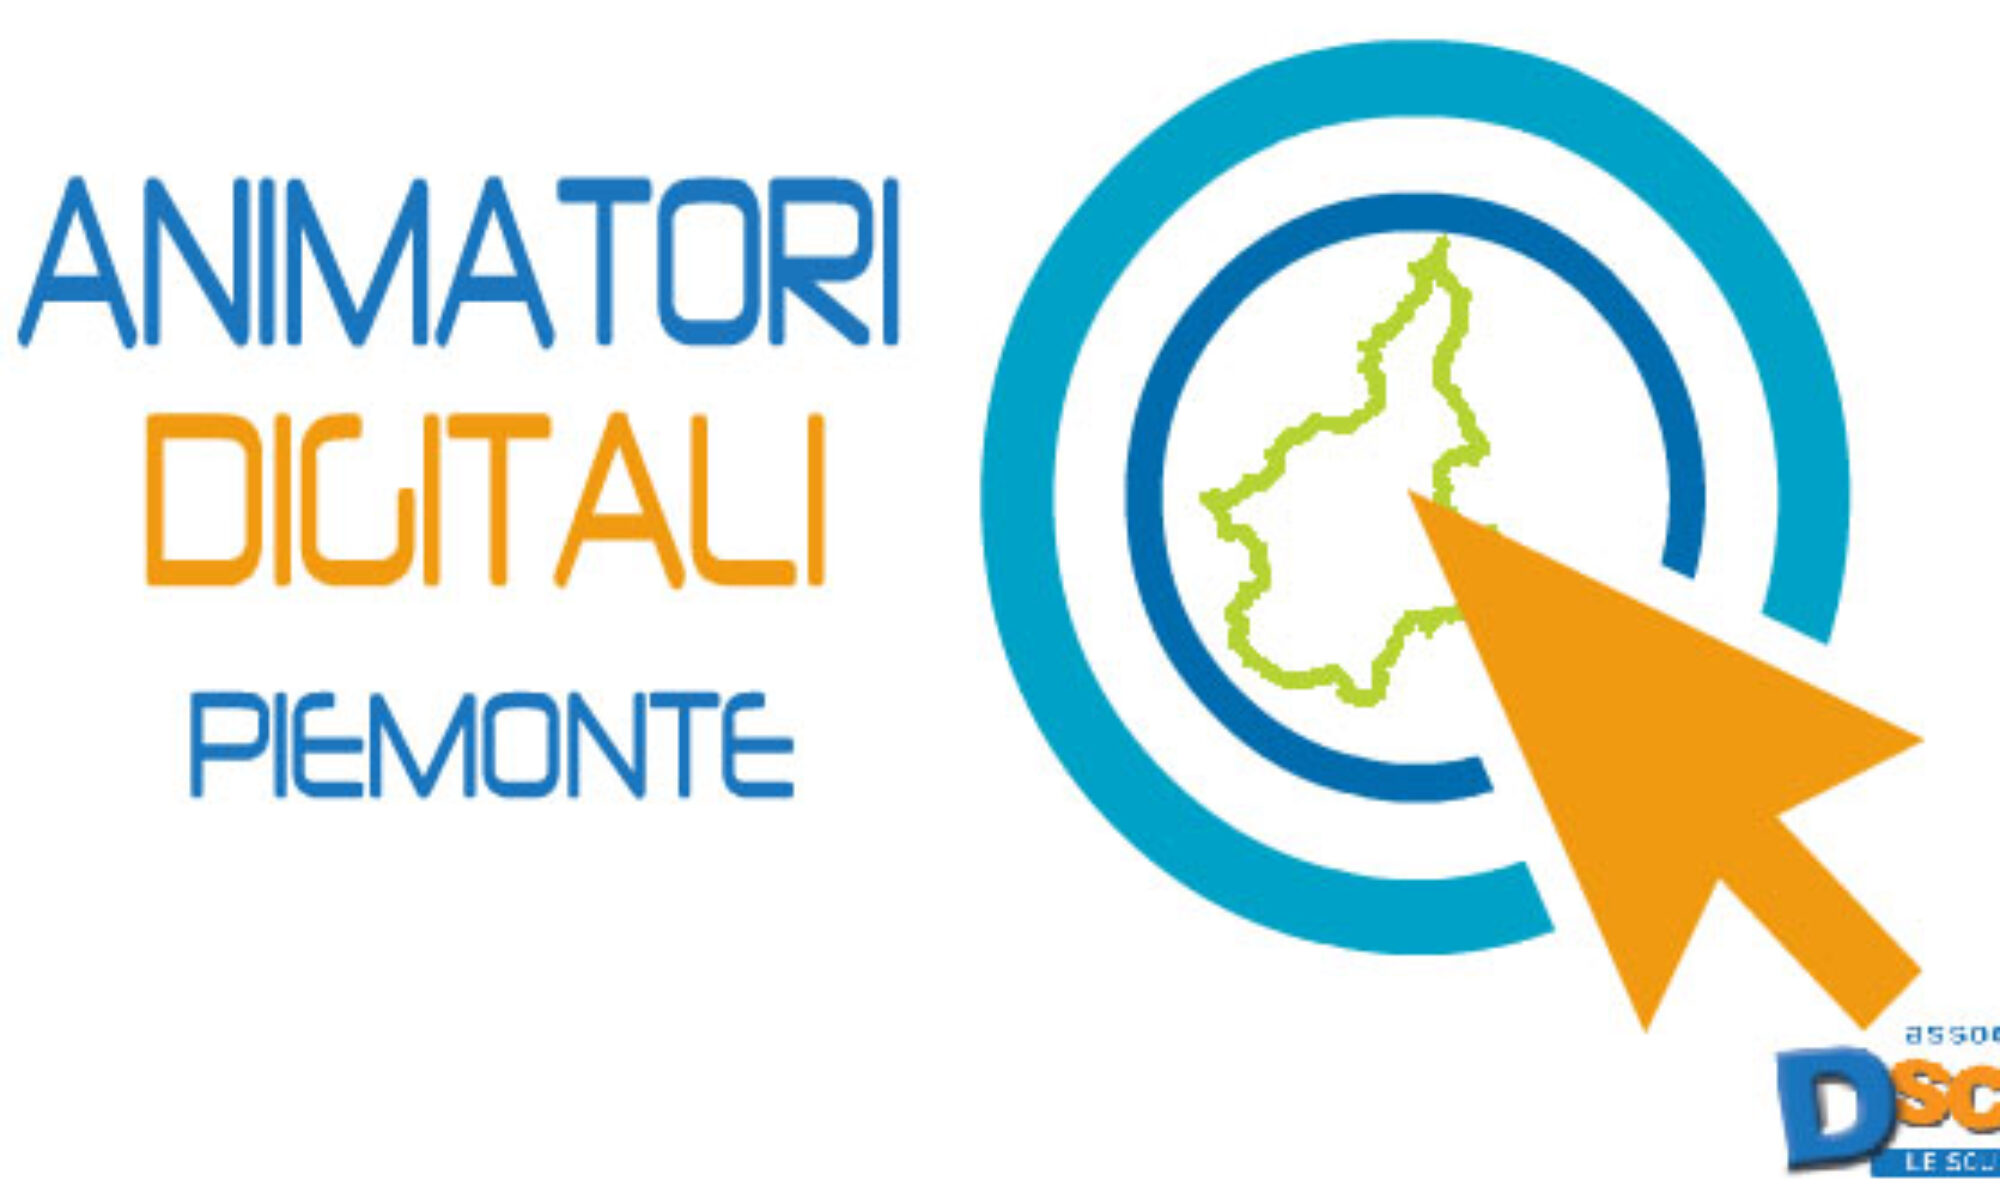 Animatori Digitali Piemonte